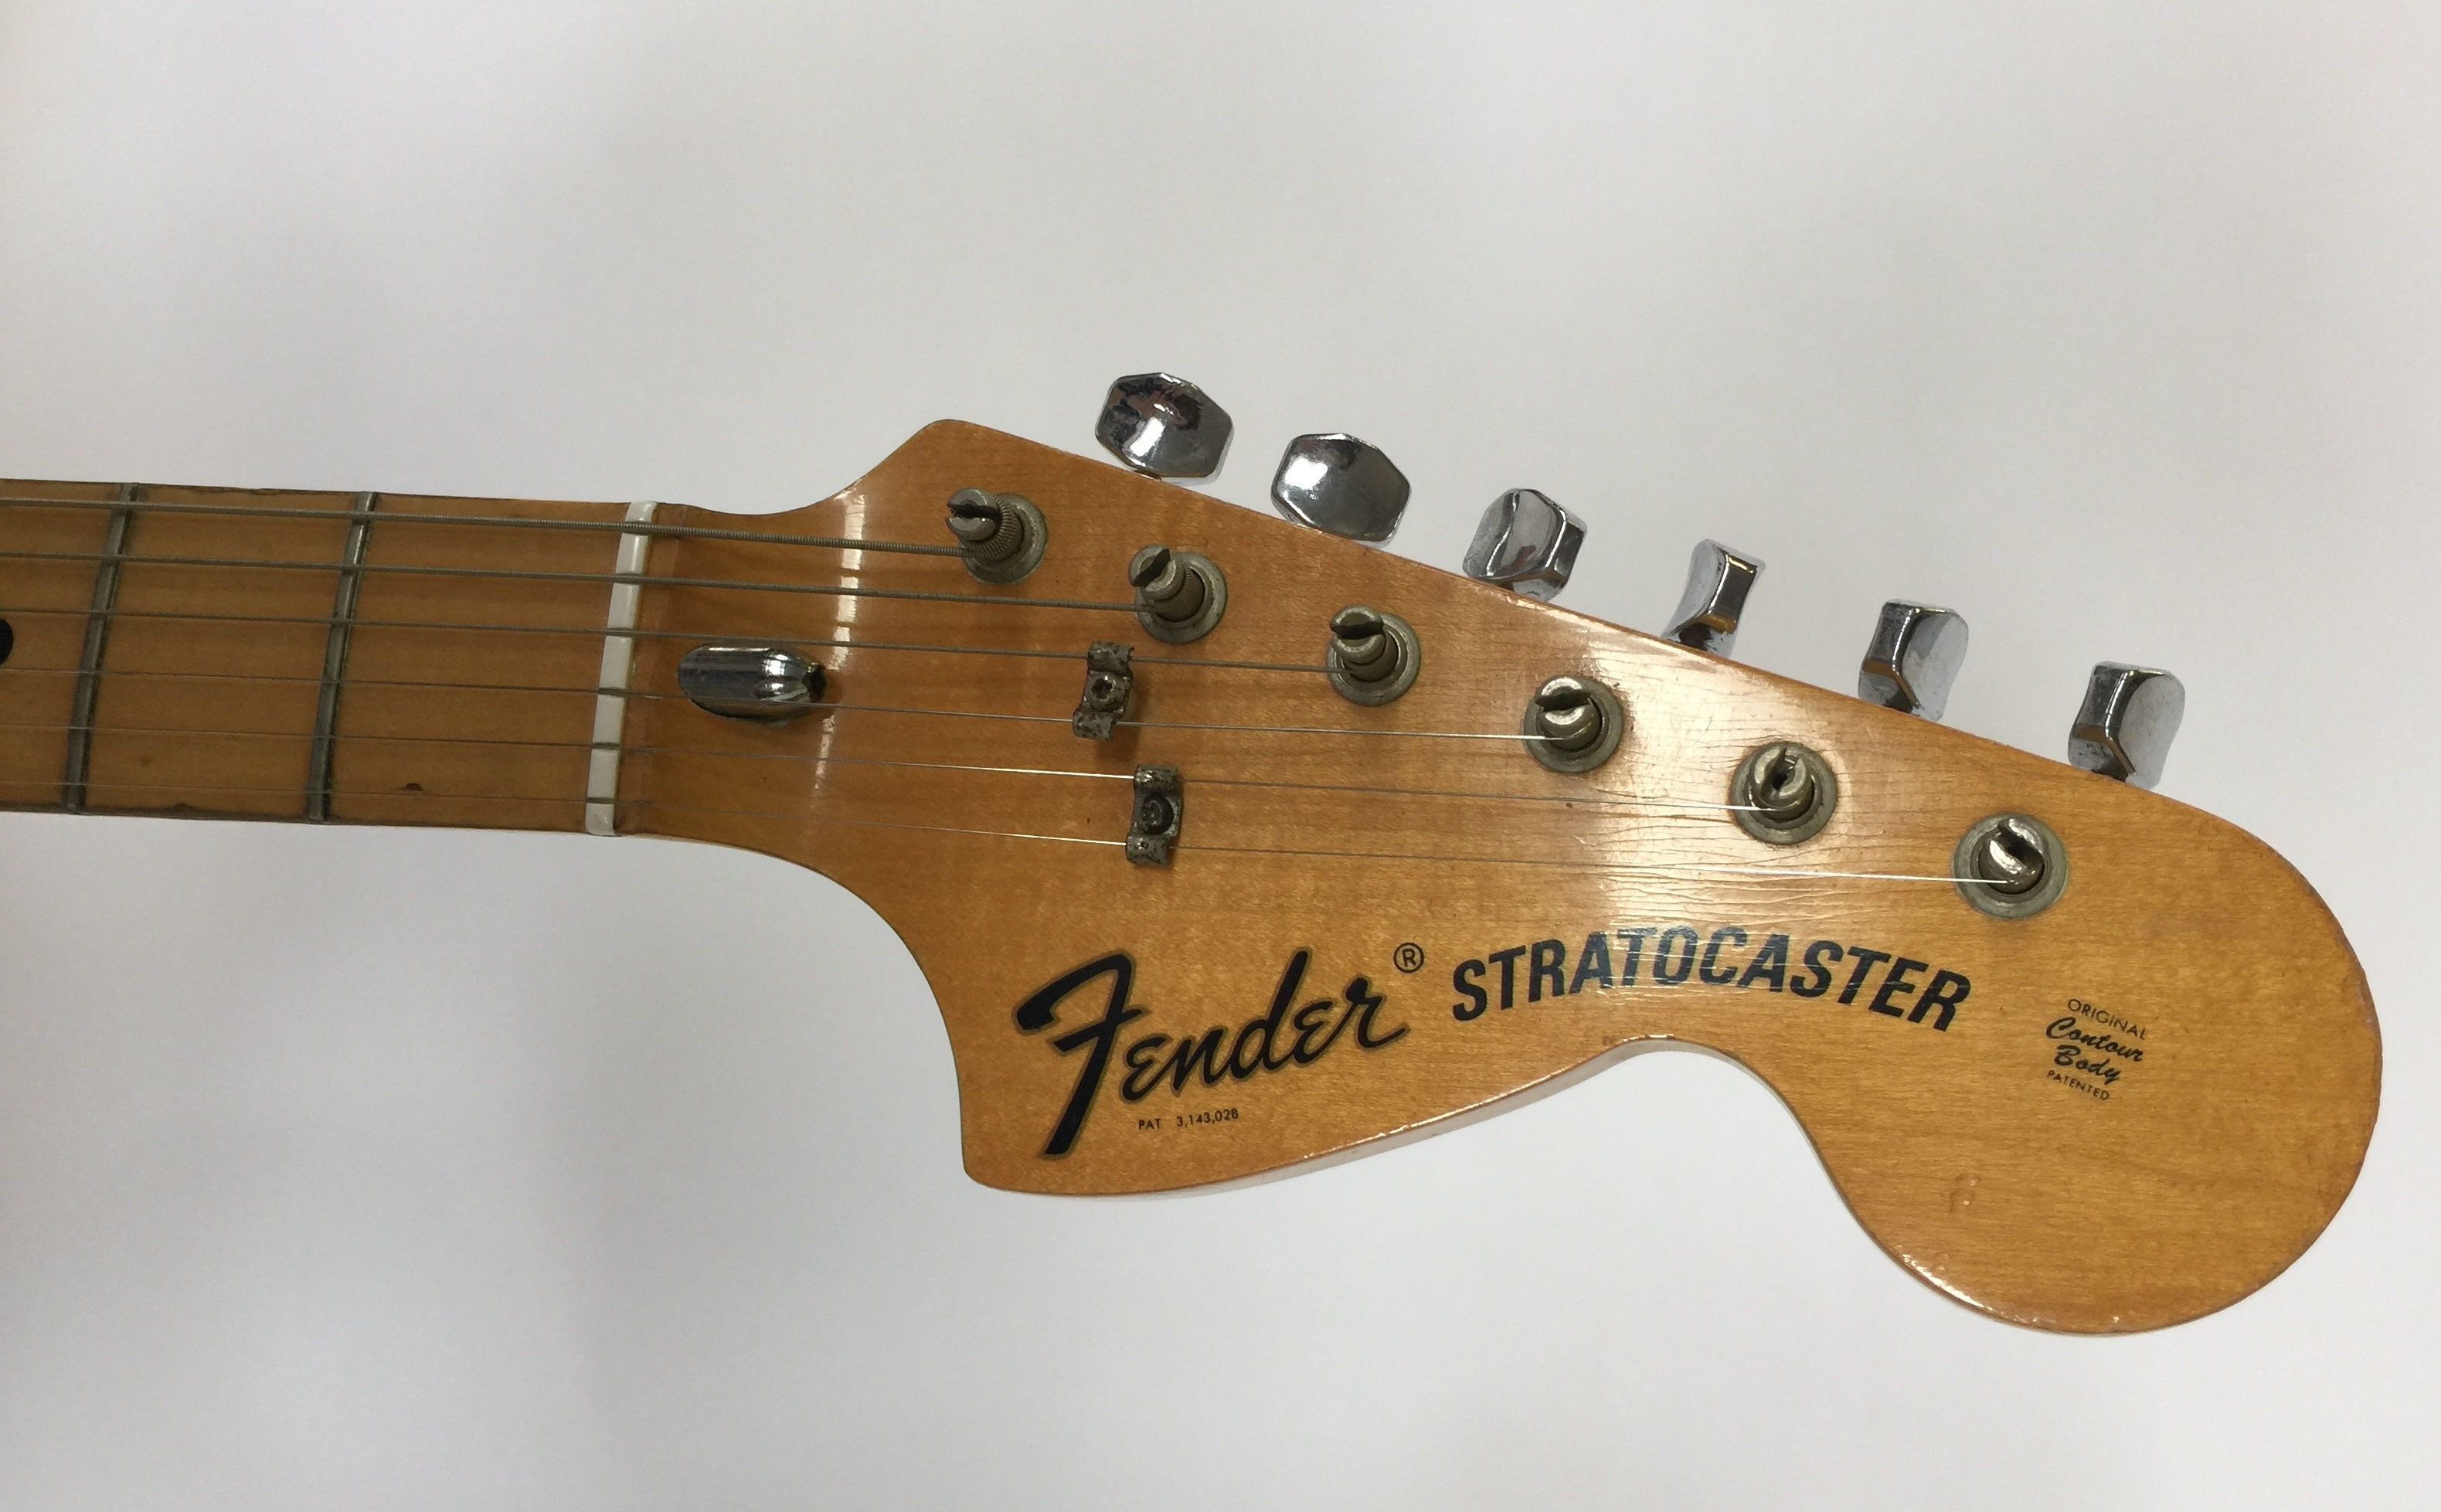 FENDER STRATOCASTER 1974 HARDTAIL - sunburst with maple neck. Serial 574552. Black Fender hard case. - Image 2 of 8